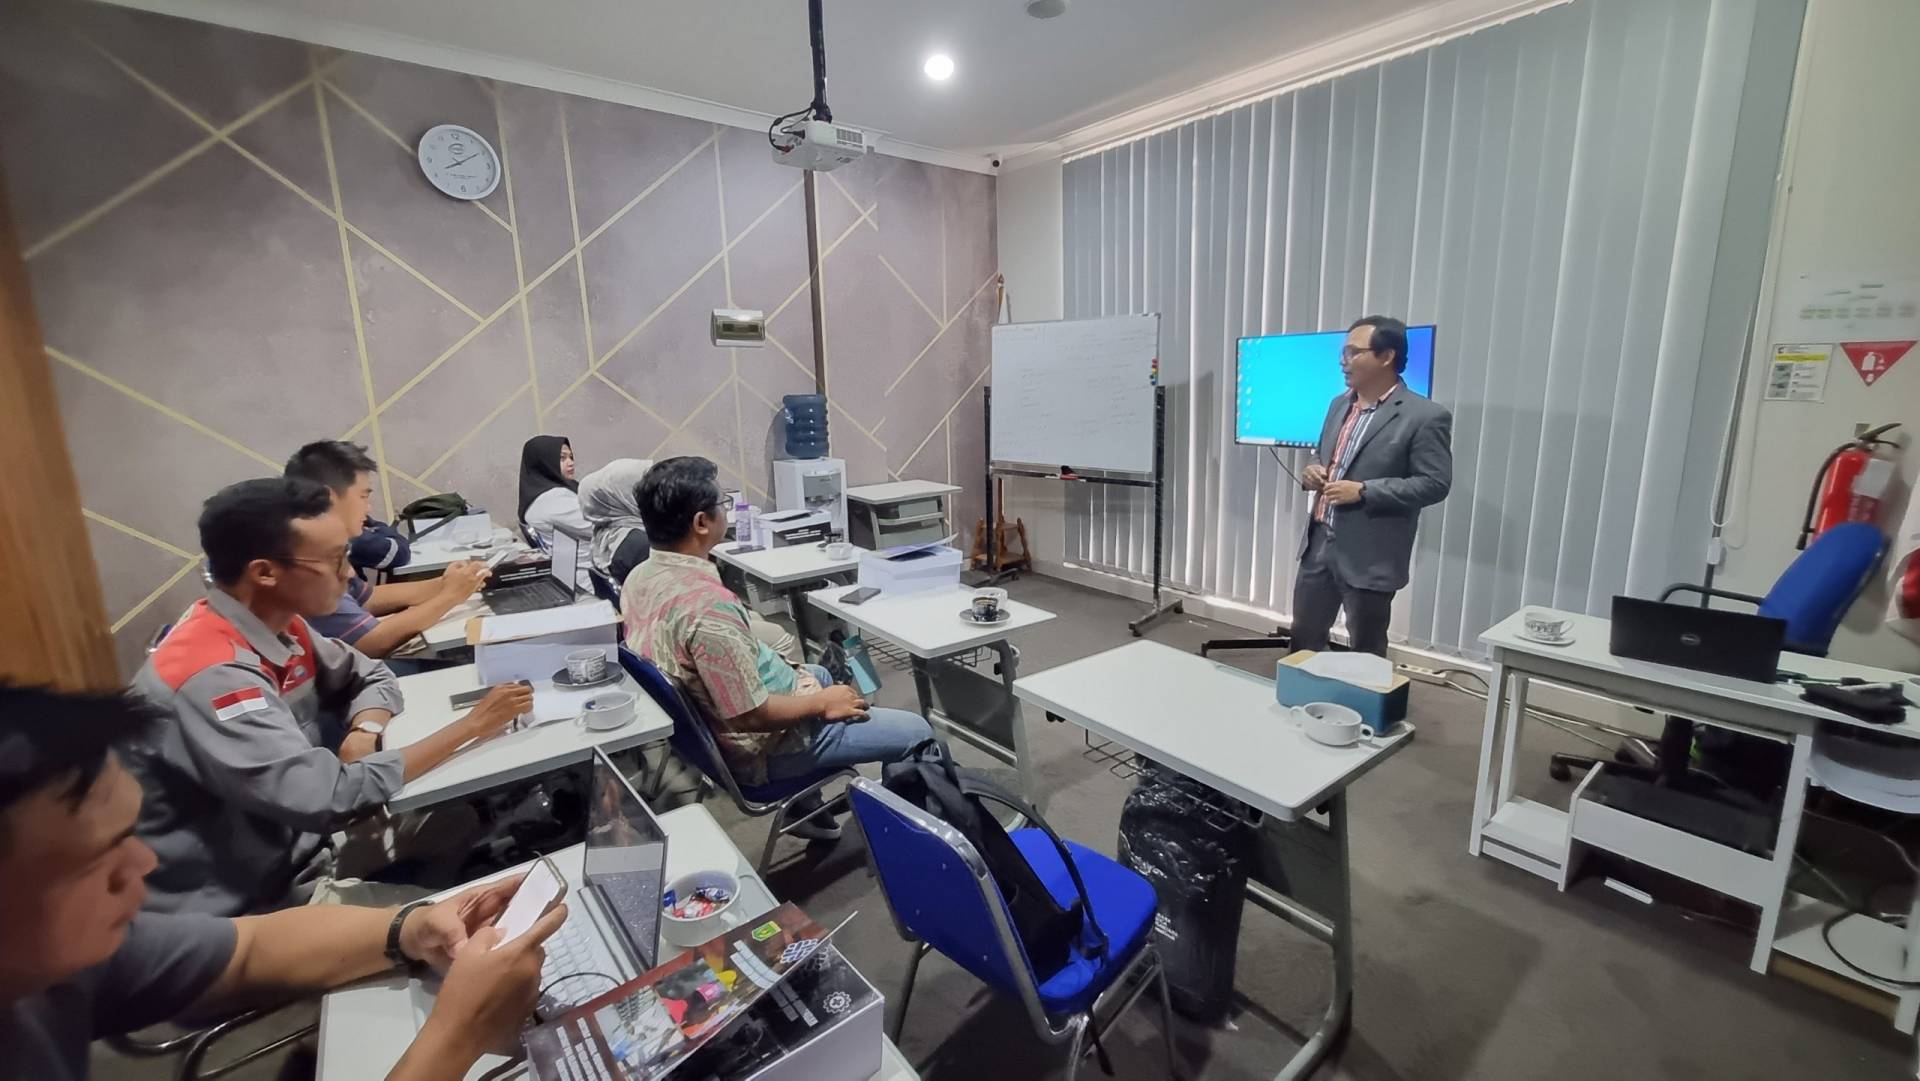 Tempat Pelatihan K3 Umum Online Di Hulu Sungai Tengah Kalimantan Selatan - Tempat Pelatihan K3 Umum Online Di Hulu Sungai Tengah Kalimantan Selatan